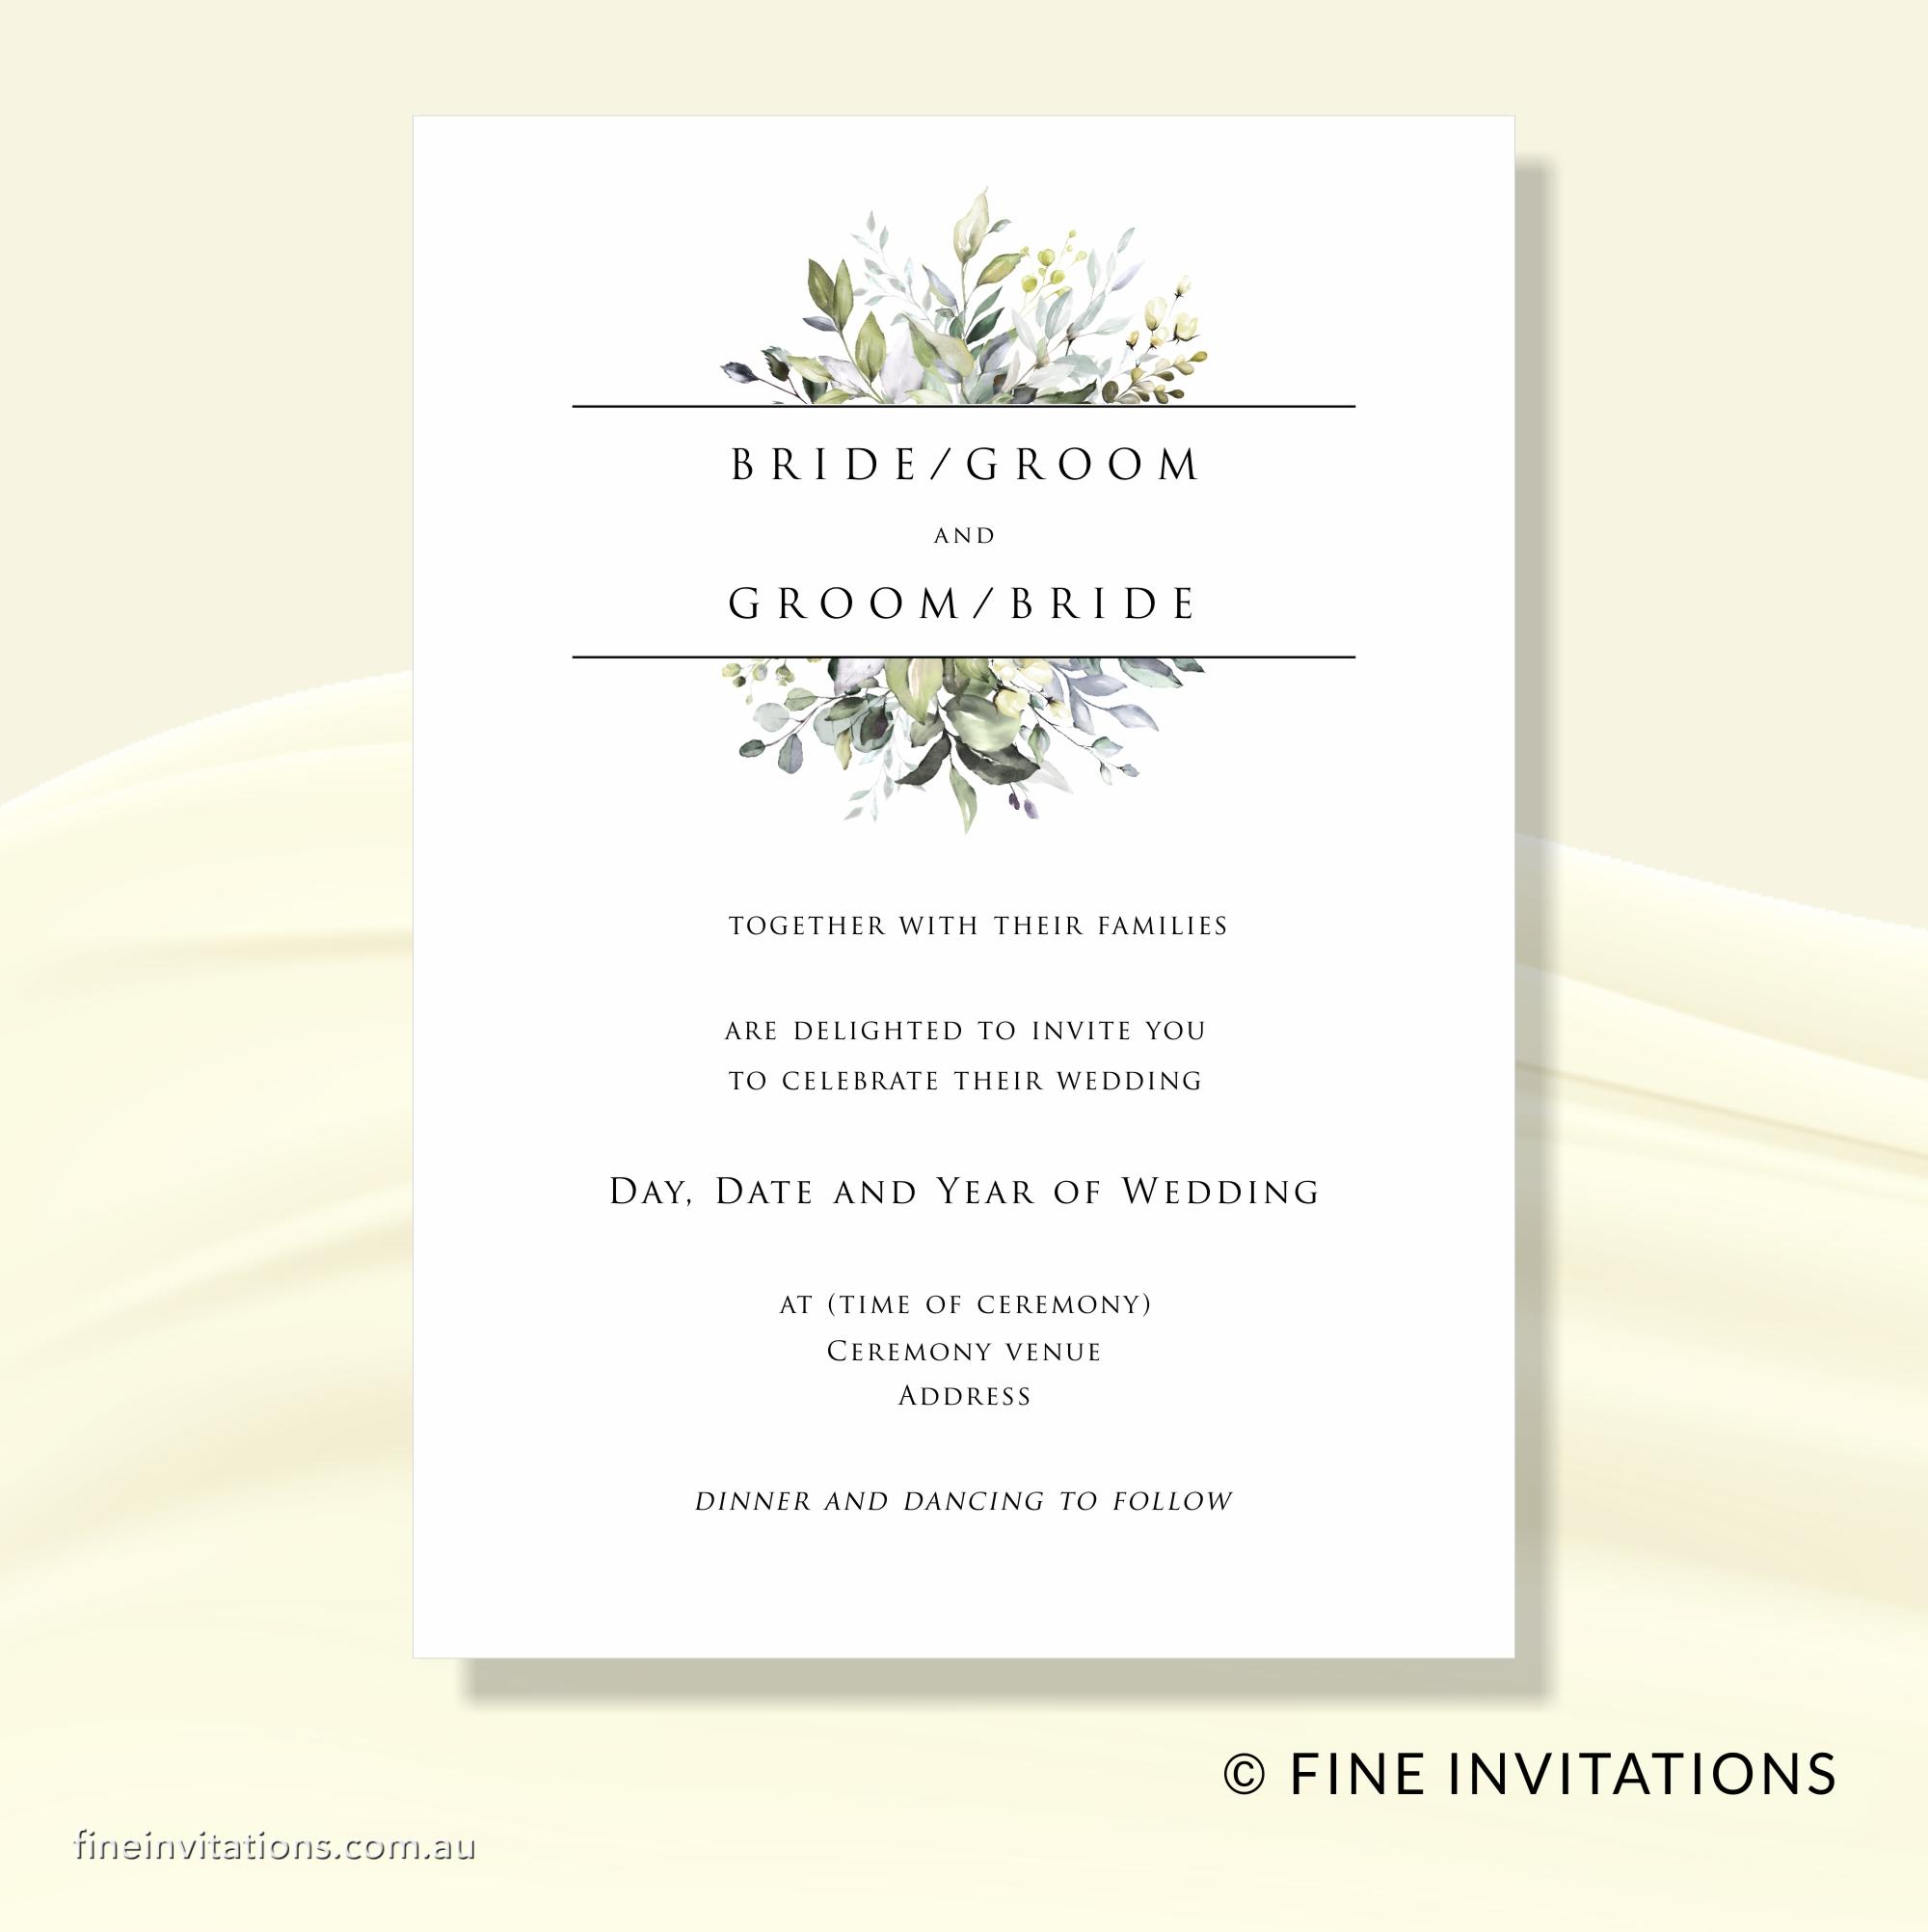 watercolour leaves wedding invitations sydney